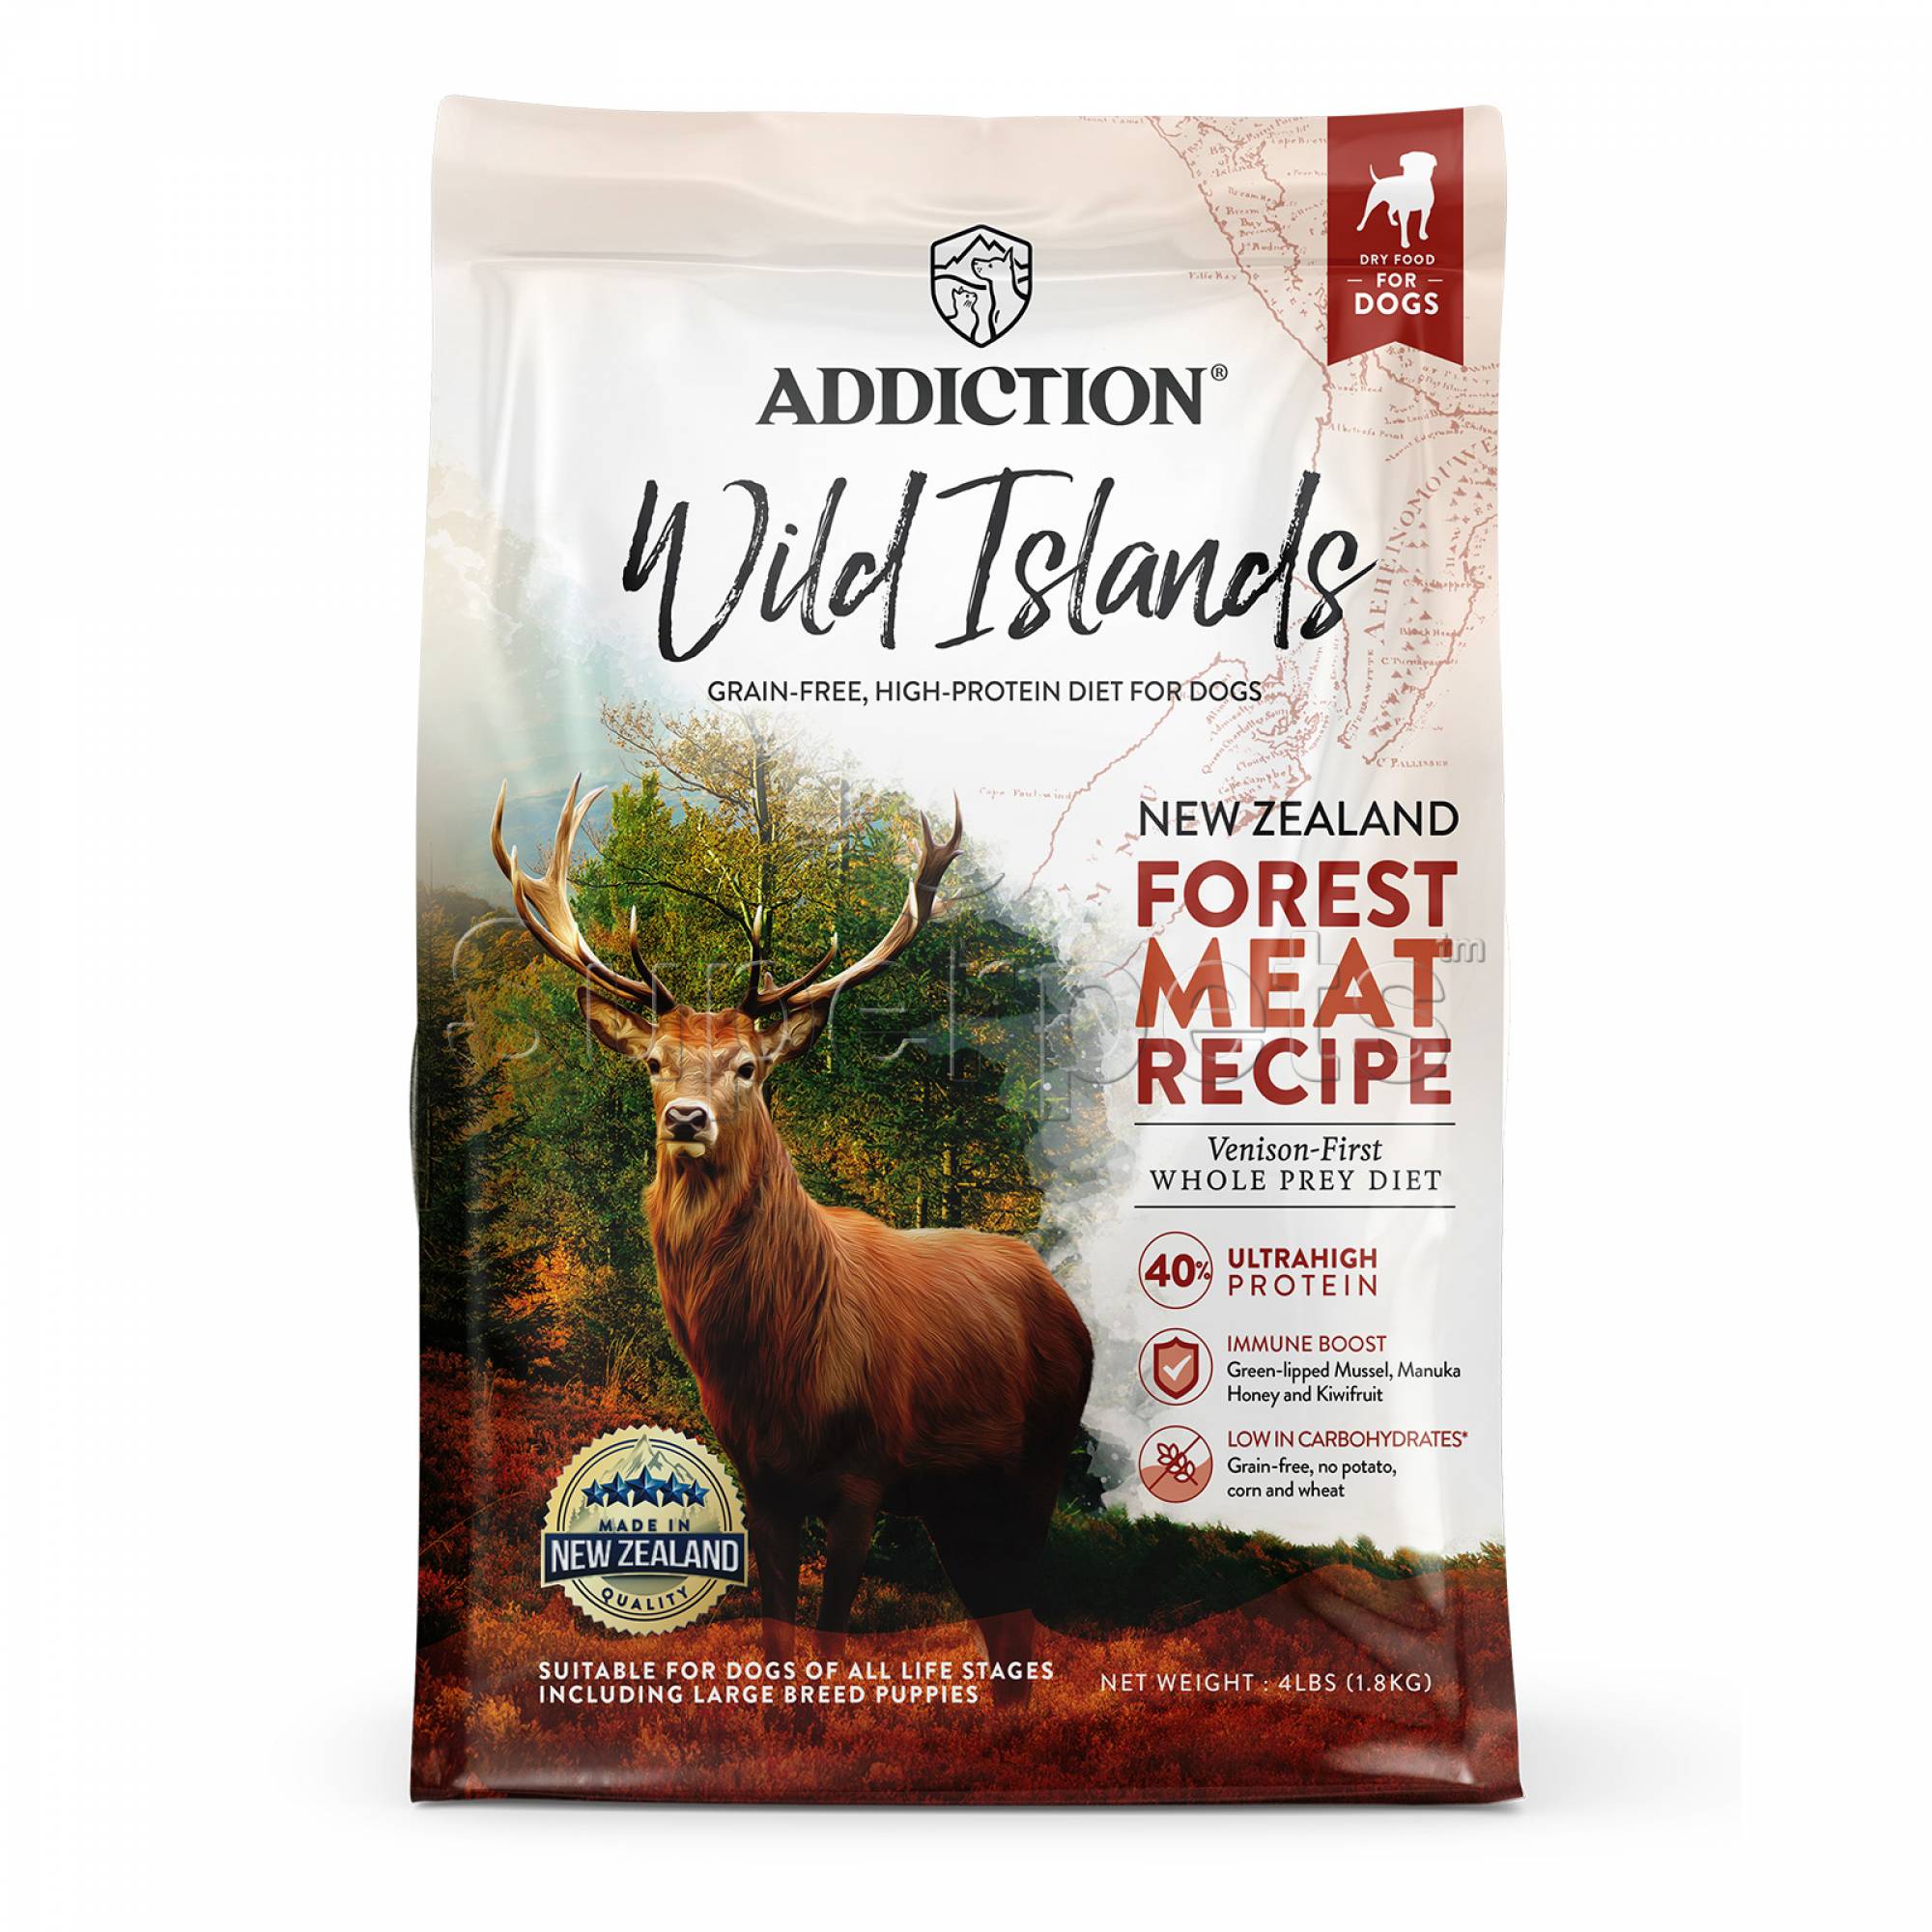 Addiction - Wild Islands Dog - Forest Meat 4lb (79205)